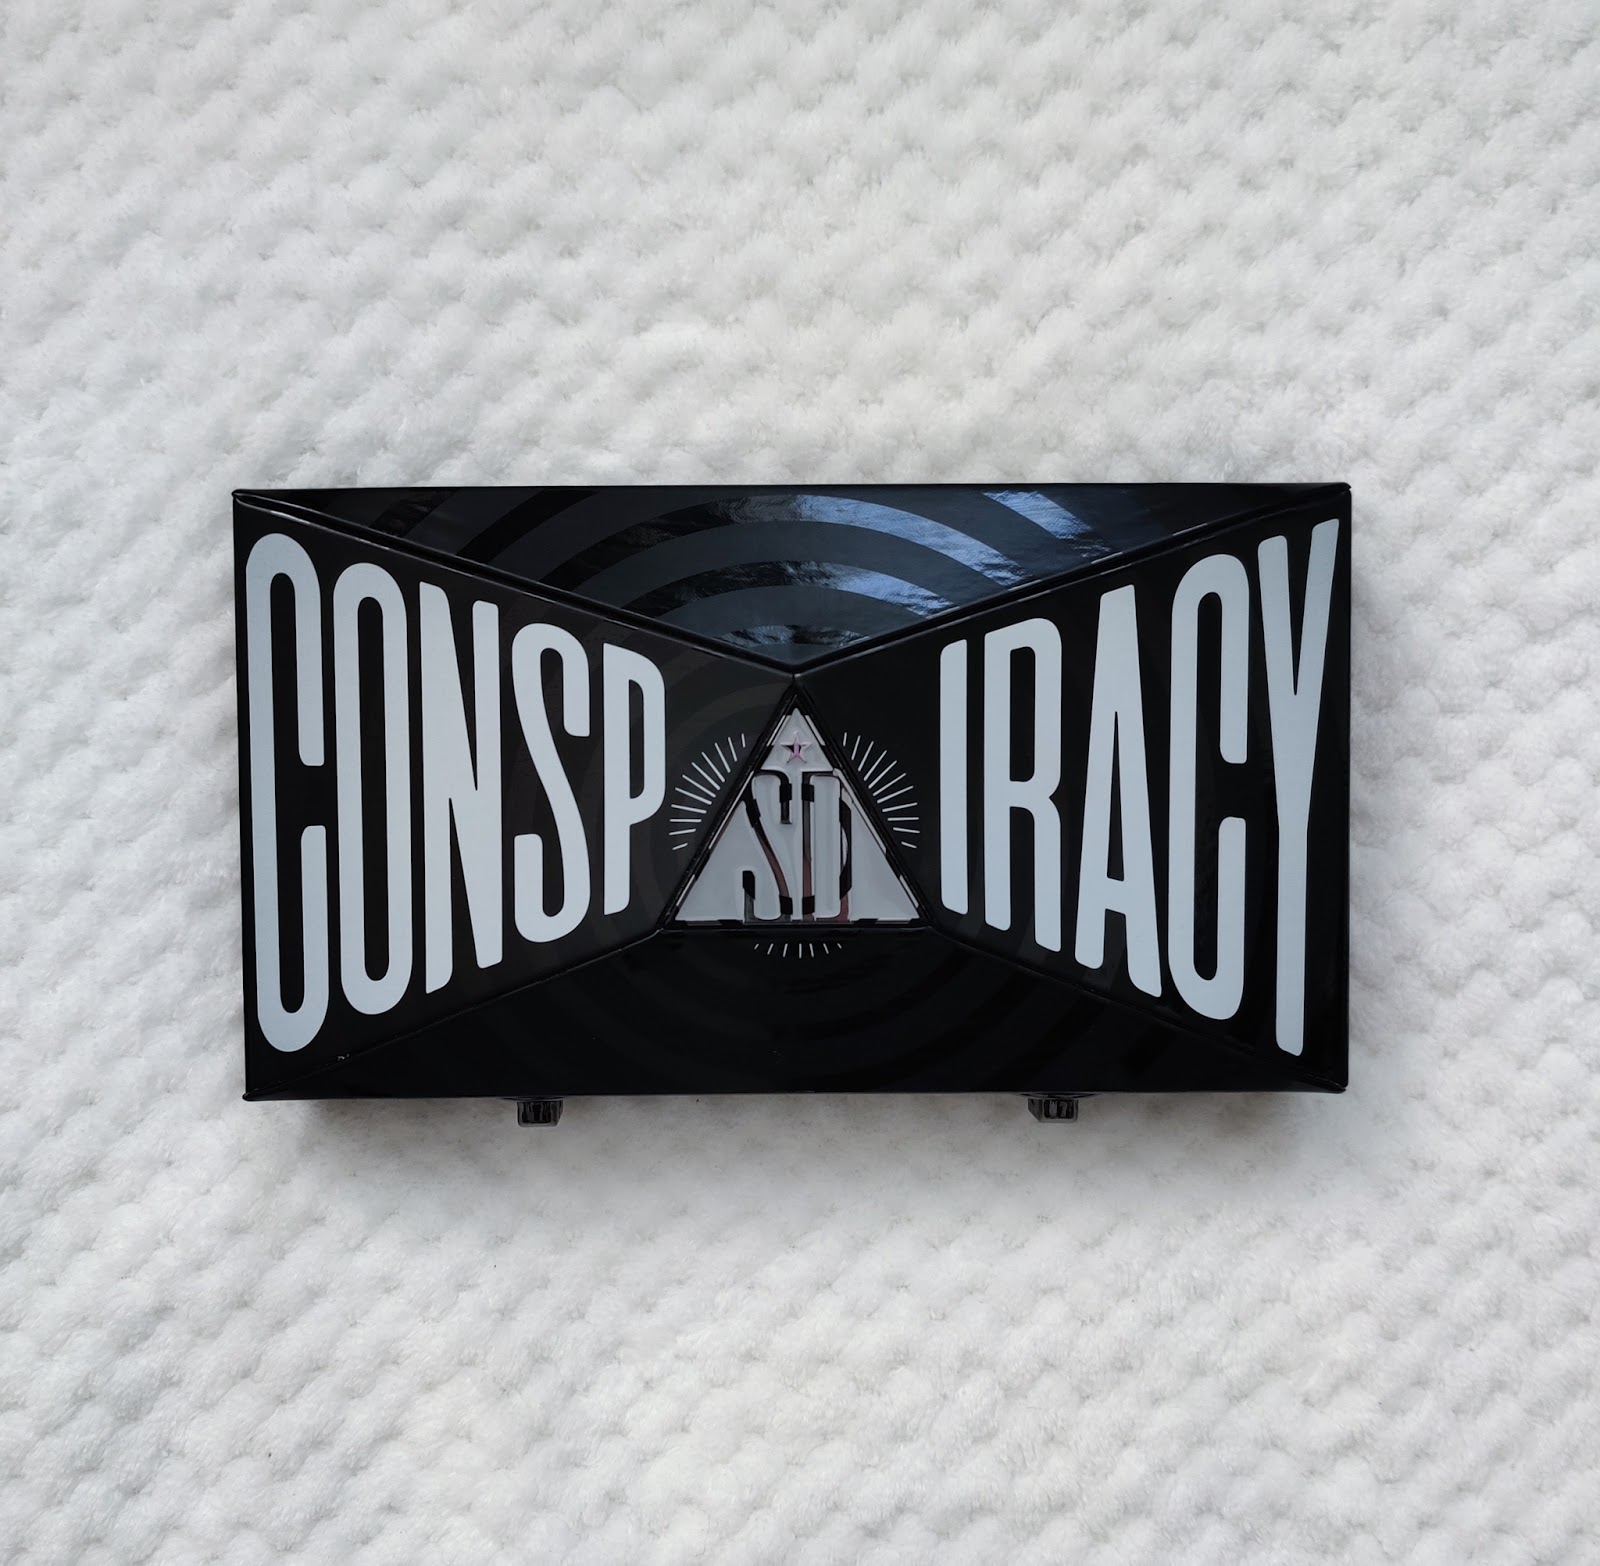 Conspiracy-paletti flatlay